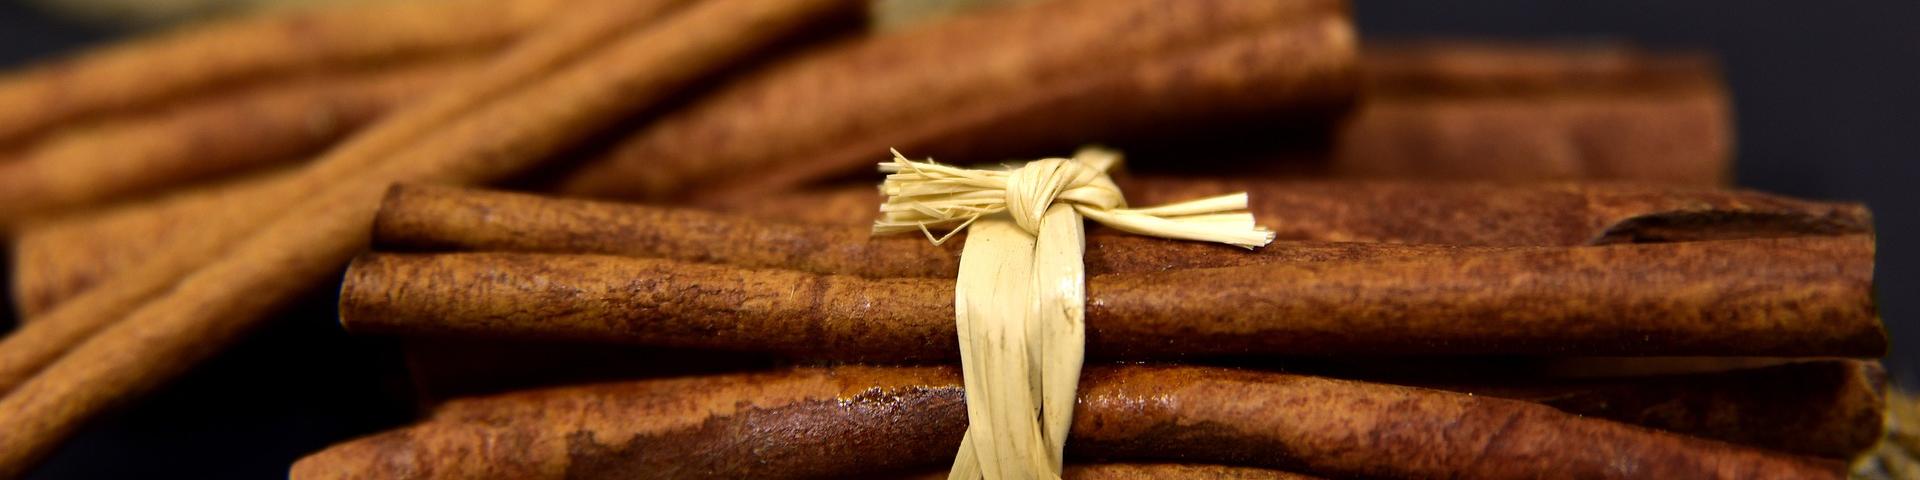 The European market potential for cinnamon